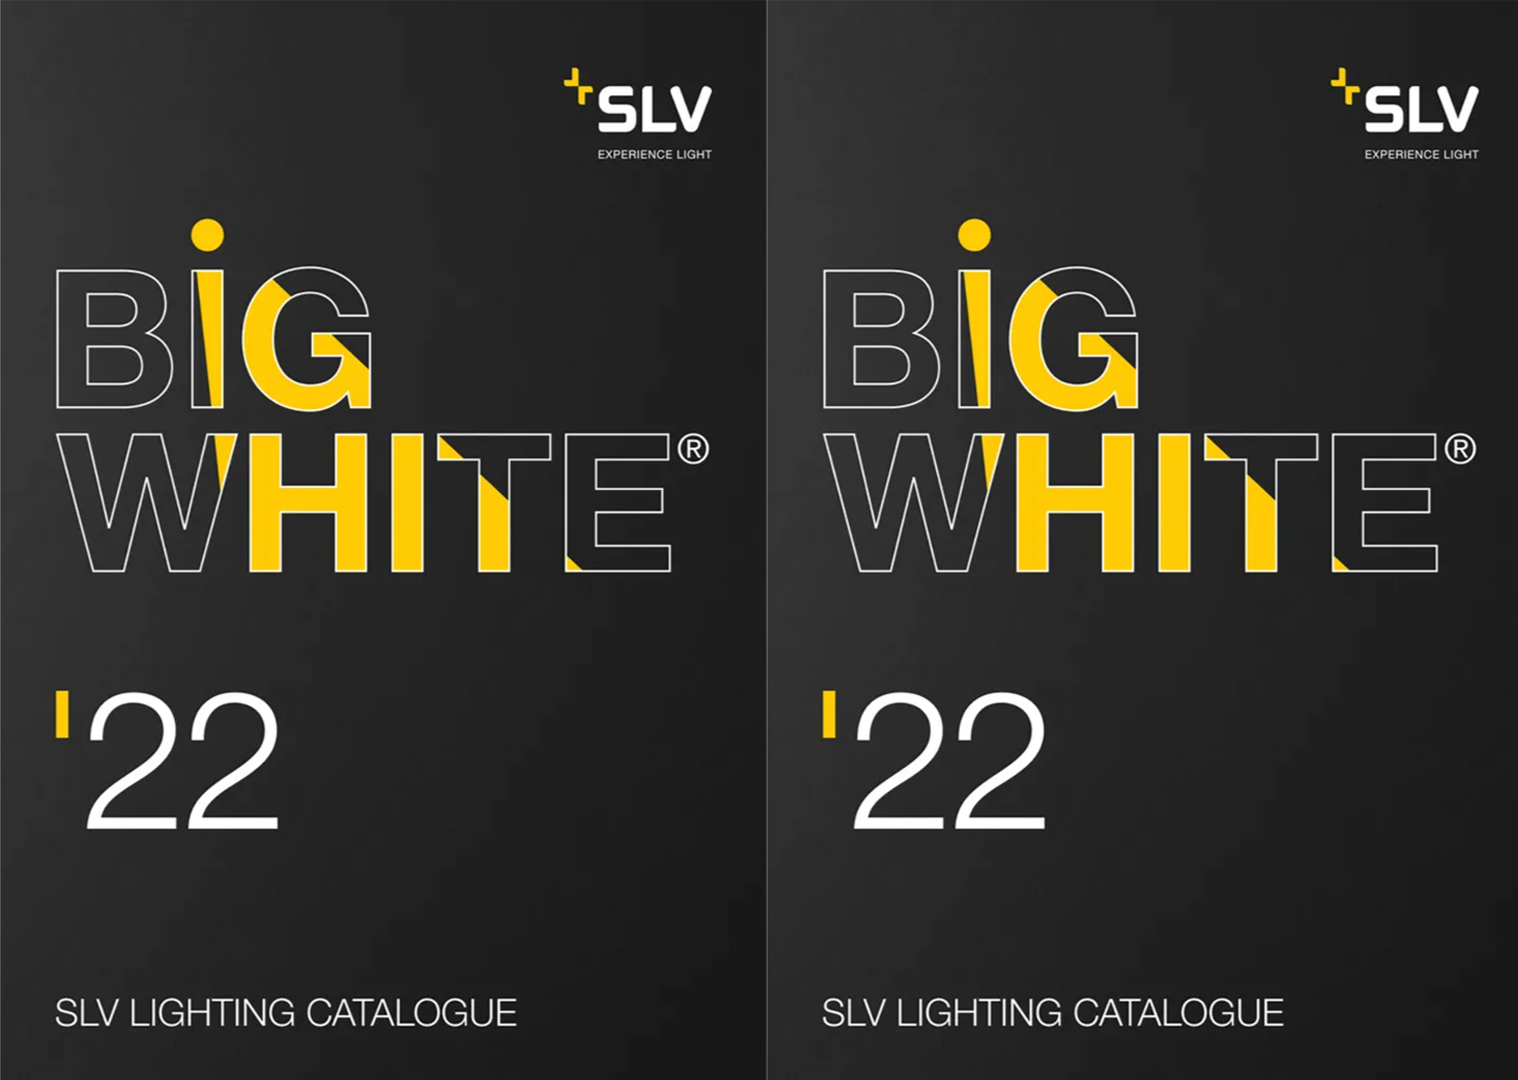 SLV Big White 2022